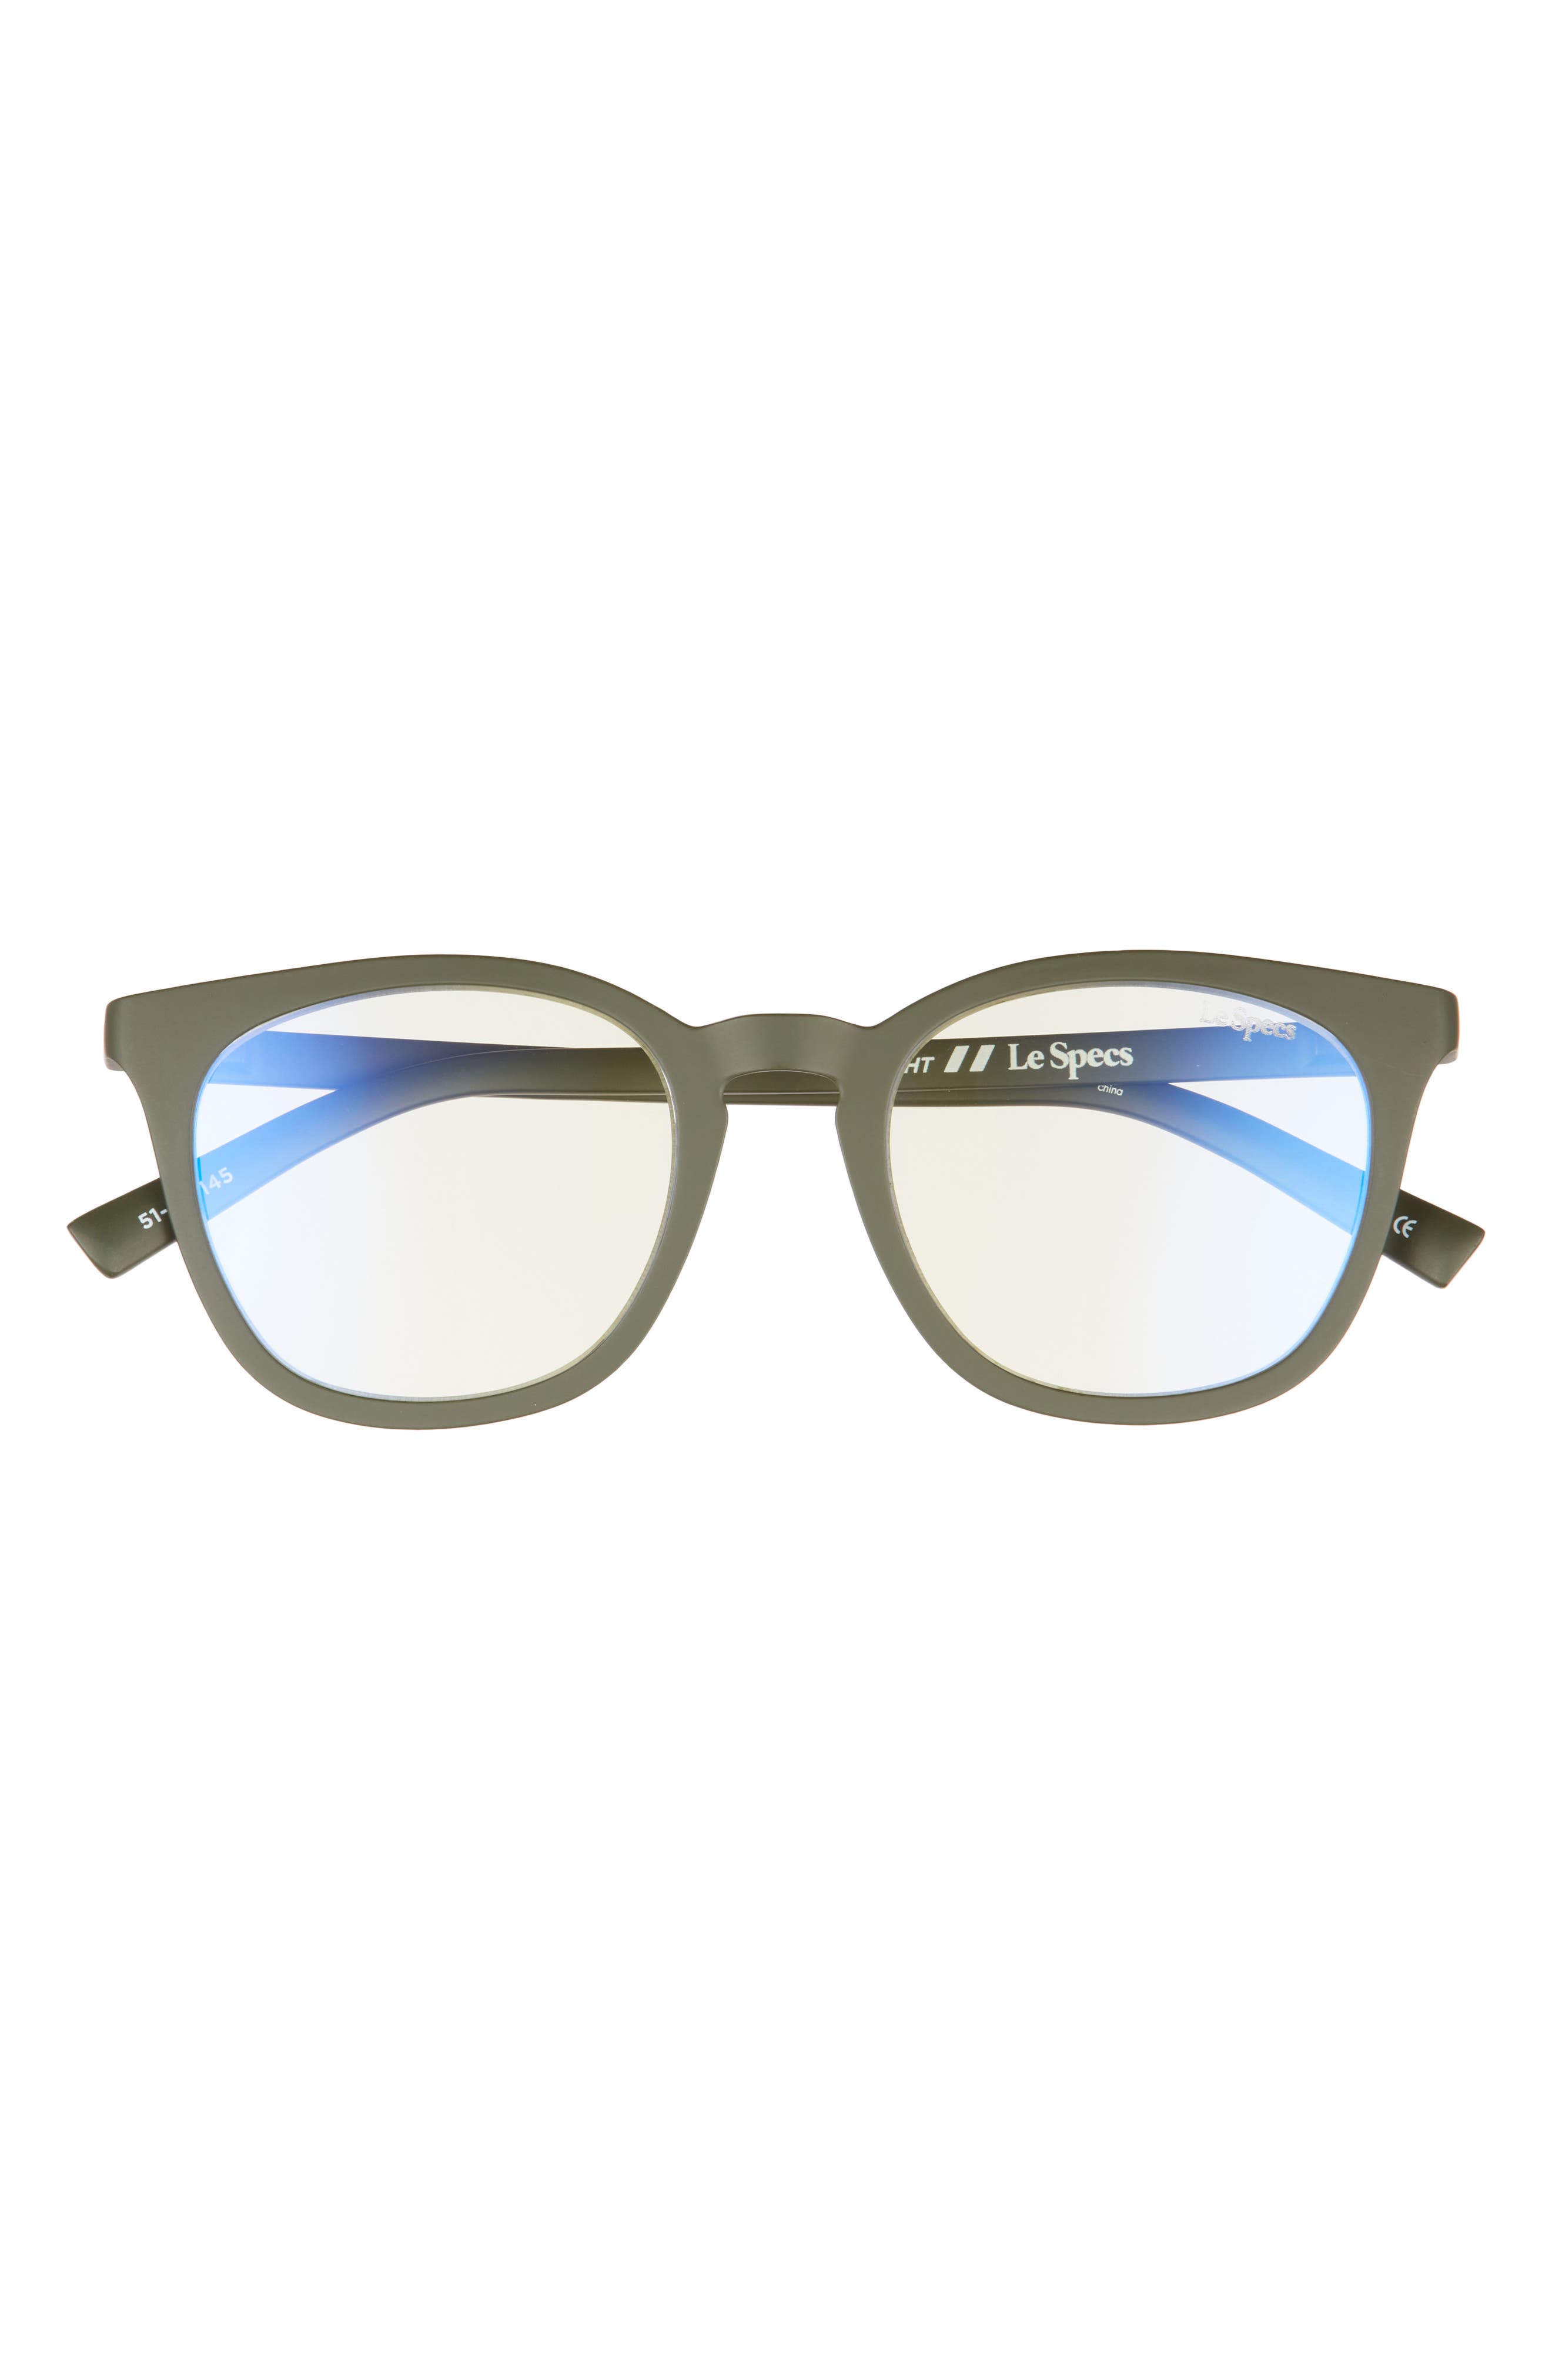 Le Specs Fine Specimen 47mm Small Blue Light Blocking Glasses in Matte Olive/Anti Blue Light at Nordstrom